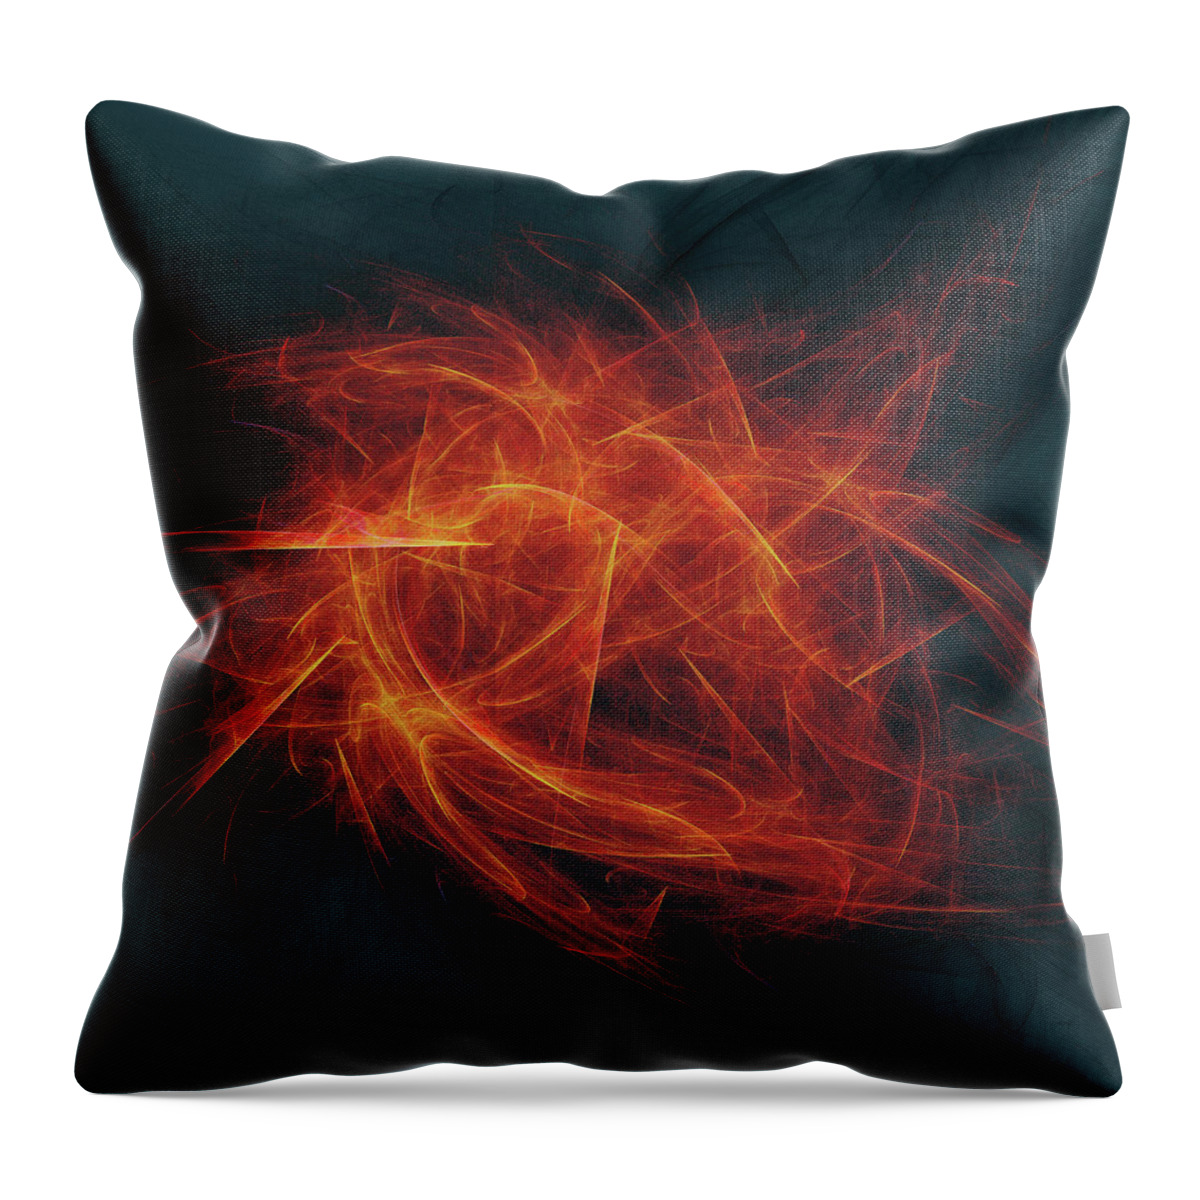 Rick Drent Throw Pillow featuring the digital art Wildfire by Rick Drent